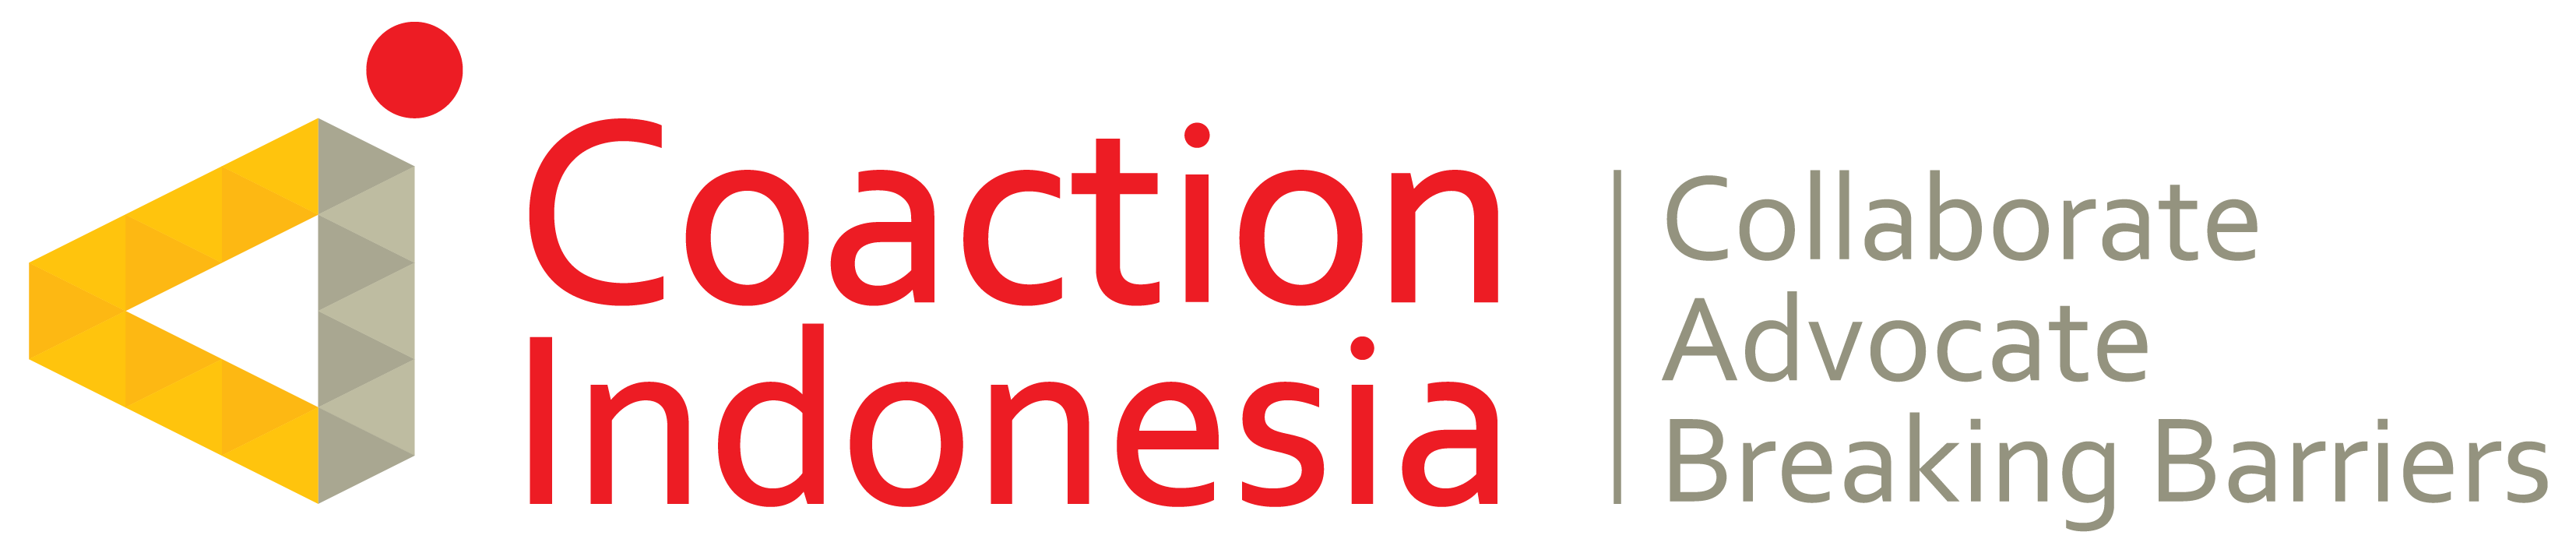 Coaction Indonesia